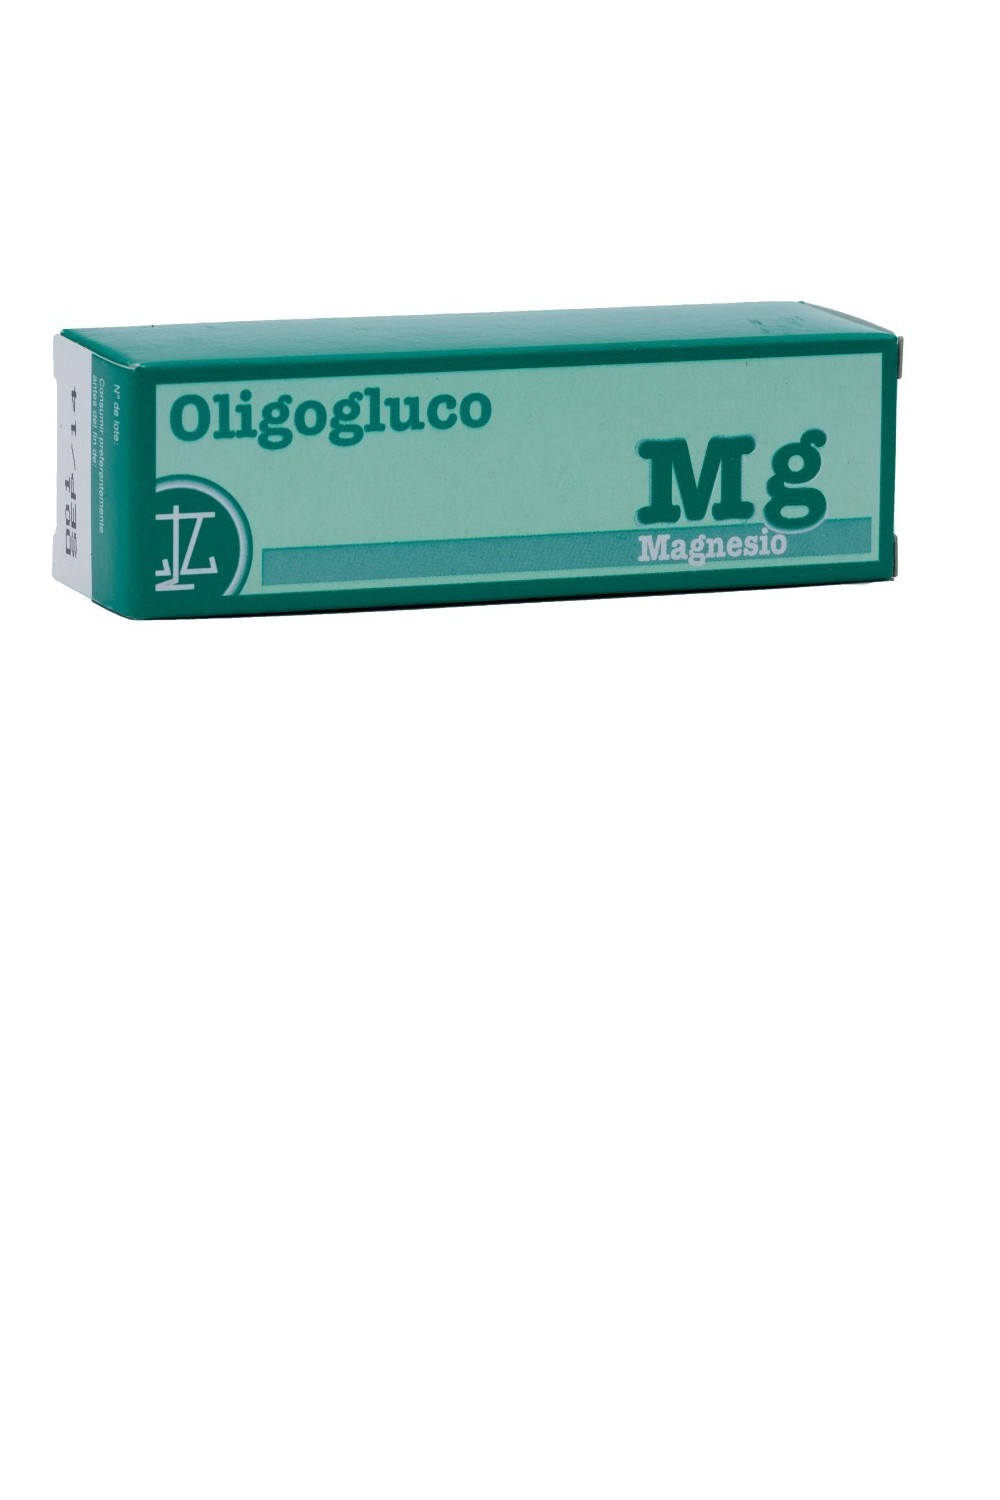 Equisalud Oligogluco Magnesio Mg 30ml